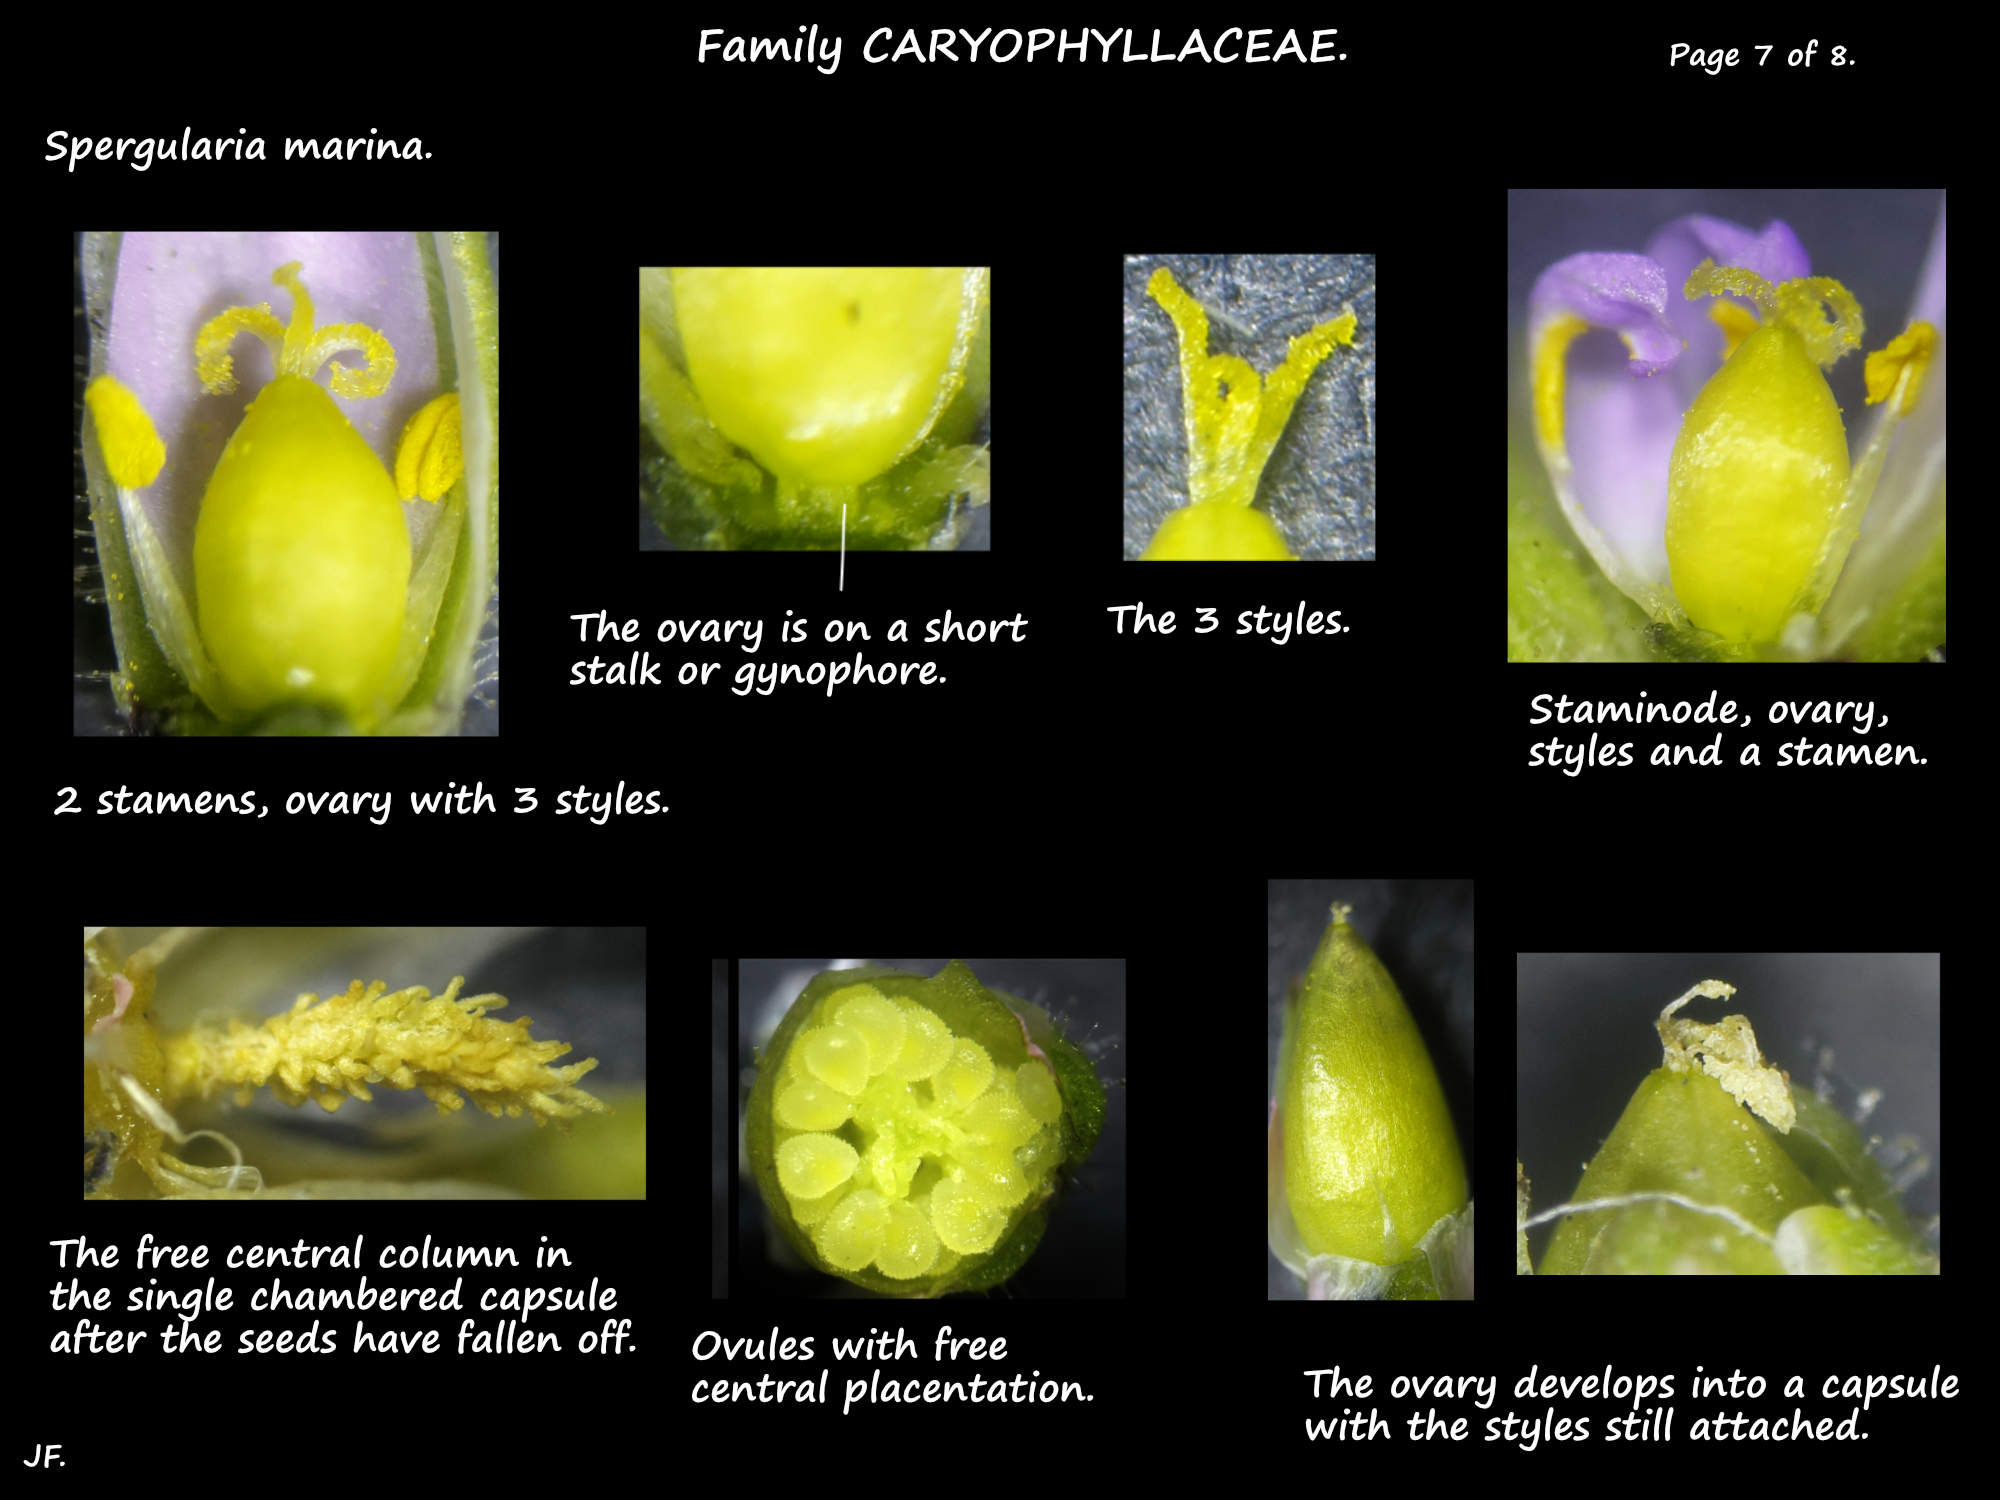 7 The gynophore, ovary & styles of Spergularia marina